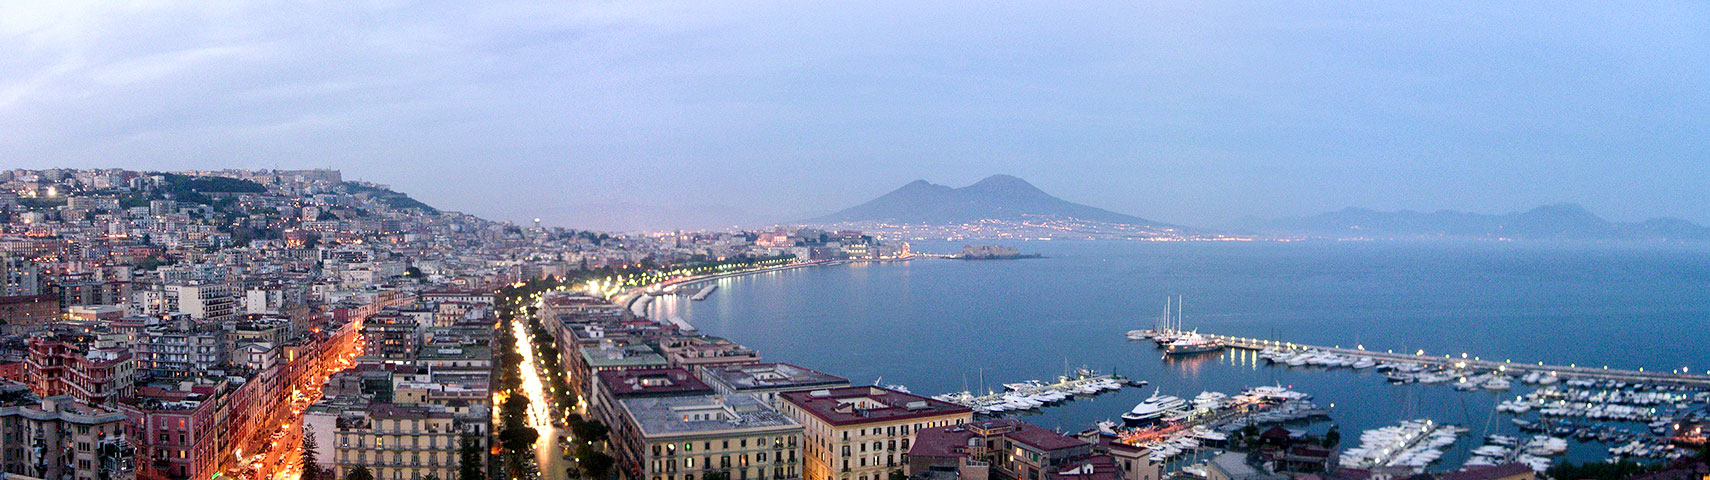 Naples panorama